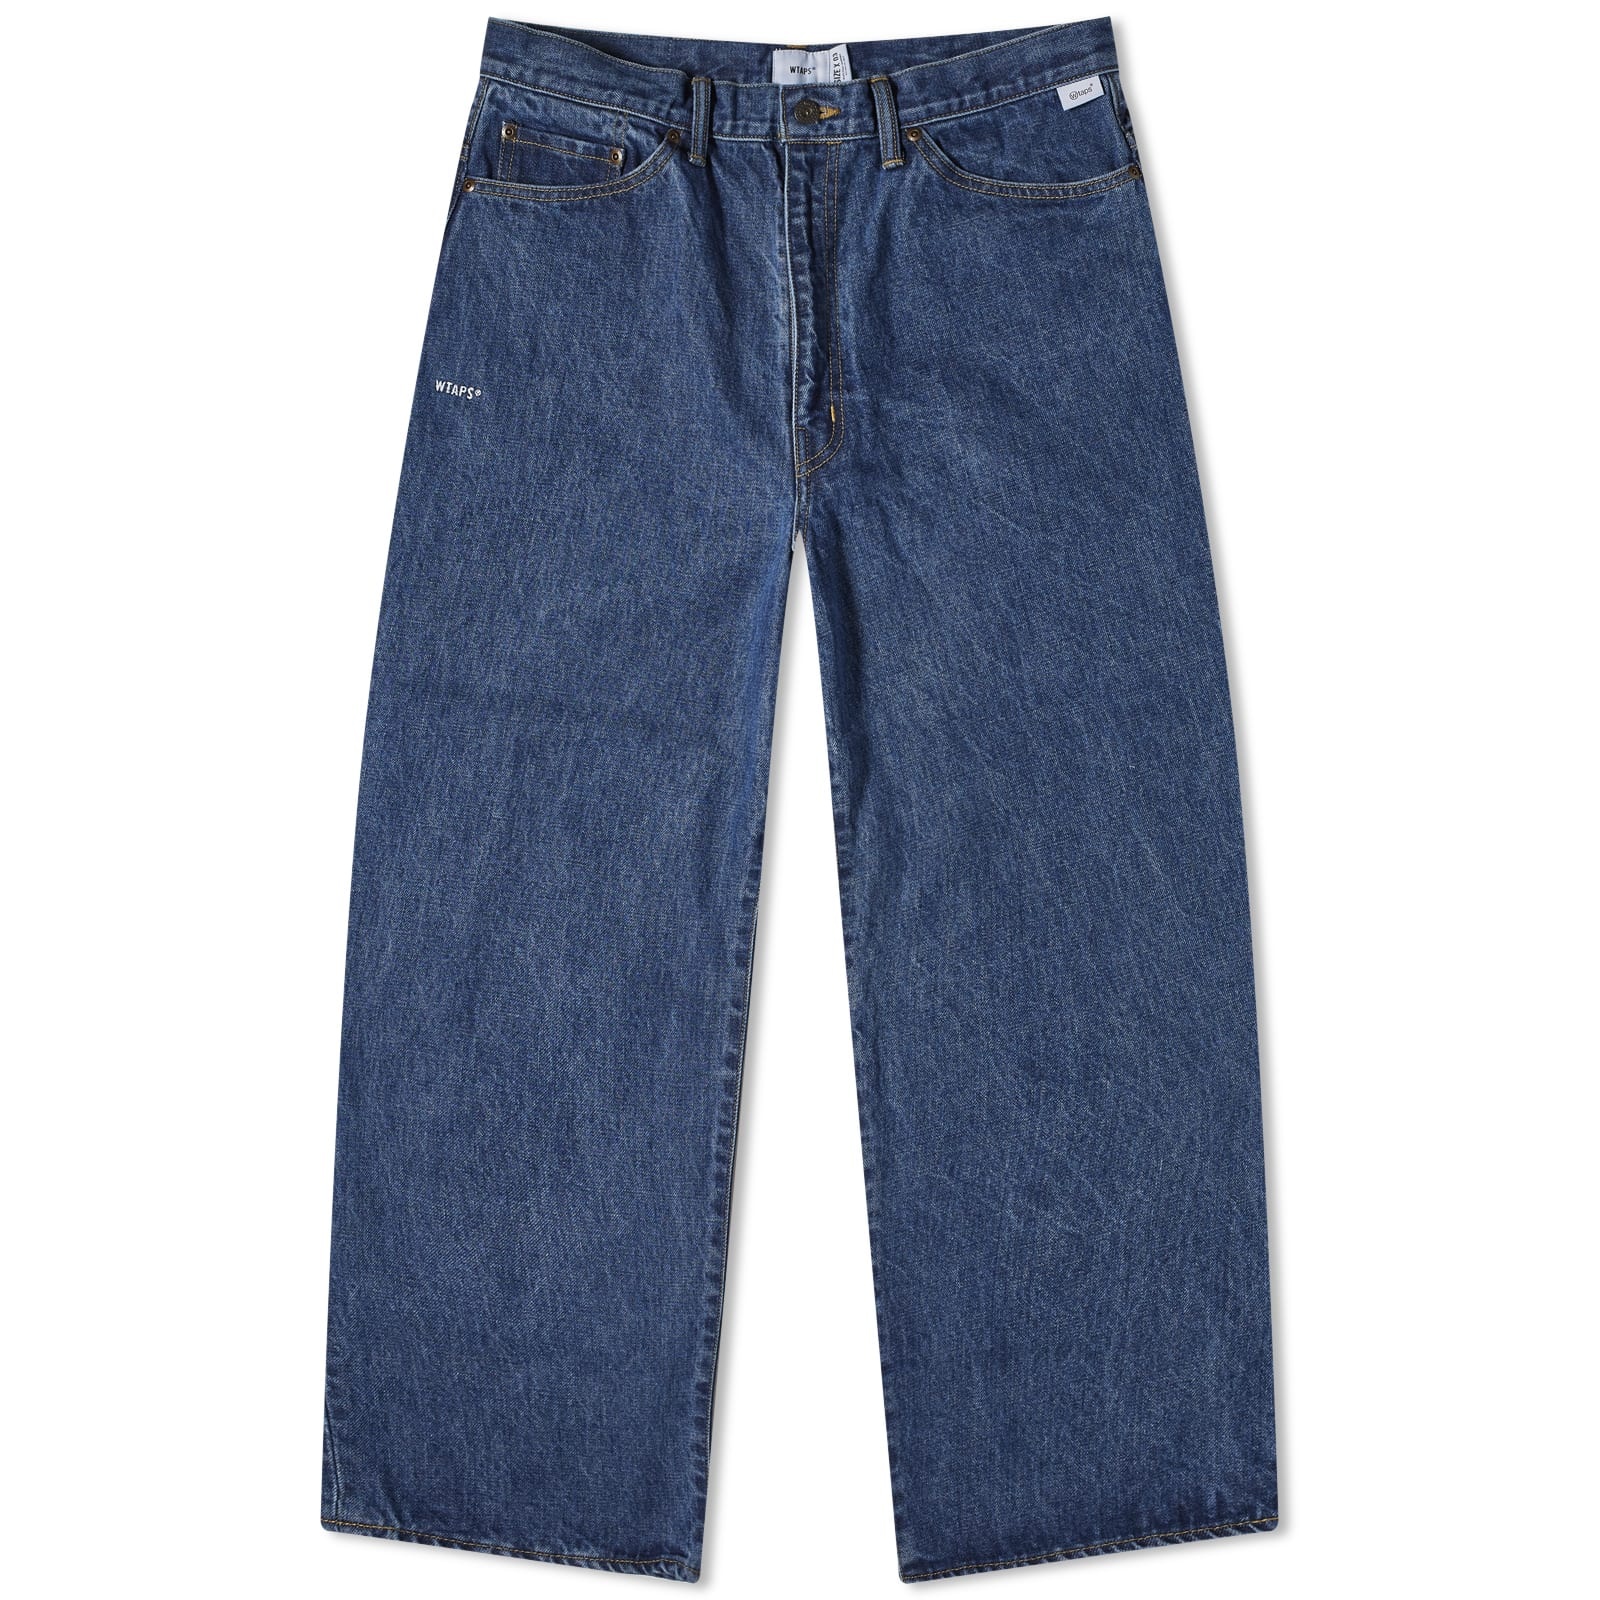 WTAPS 18 Loose Jeans - 1